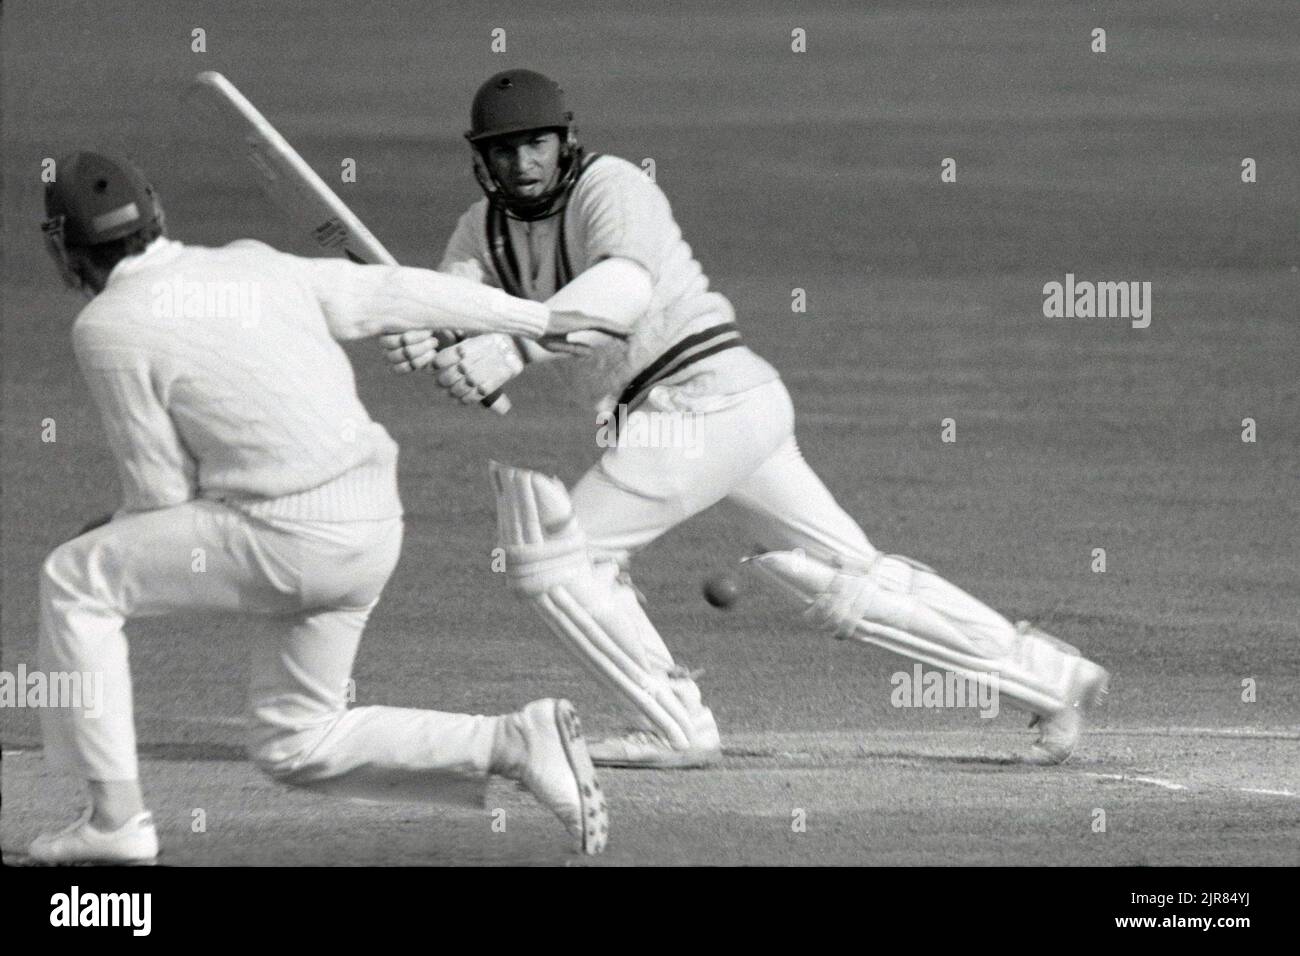 Wasim Akram, batting for Pakistan against England, Fourth Test Match, England vs Pakistan, Edgbaston, Birmingham, England 23 - 28 July 1987 Stock Photo